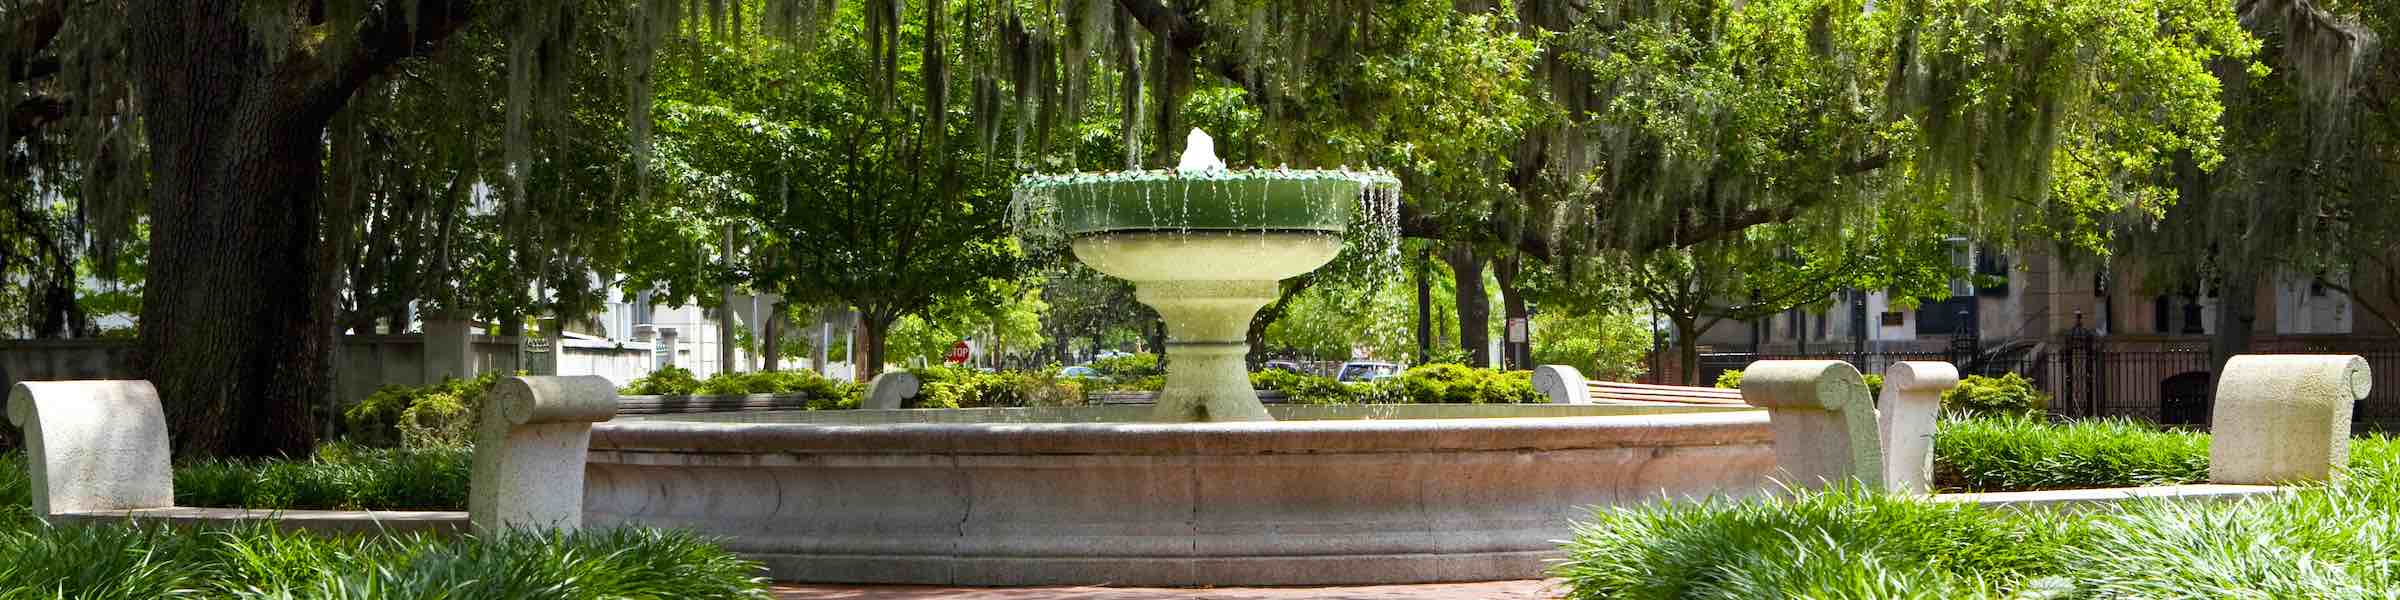 Orleans Square, Savannah